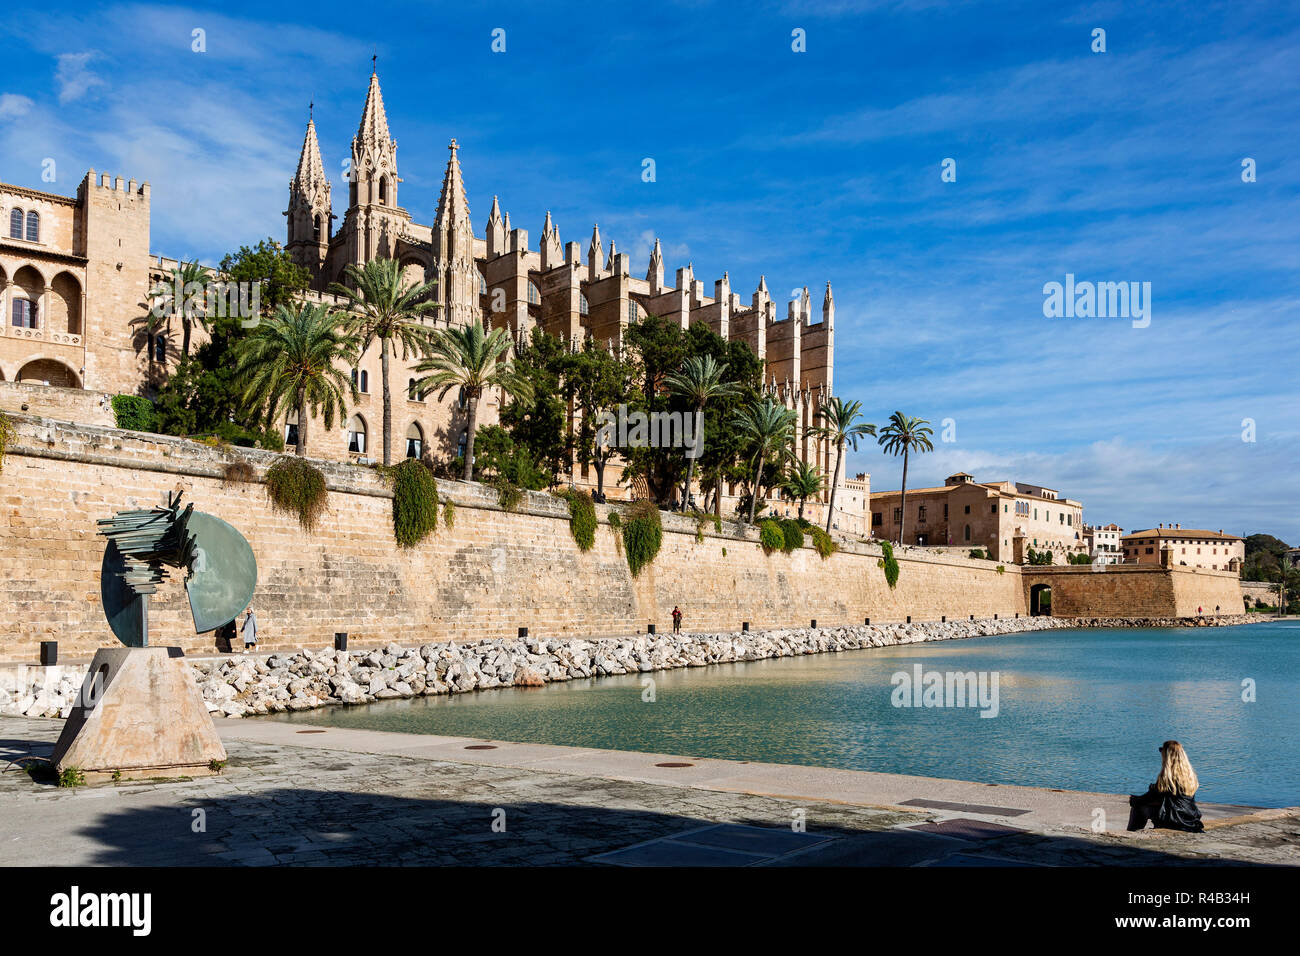 La cathédrale de Palma ou La Seu, Palma ou Palma de Majorque, Malaga, Majorque, Iles Baléares, Espagne, Europe Banque D'Images